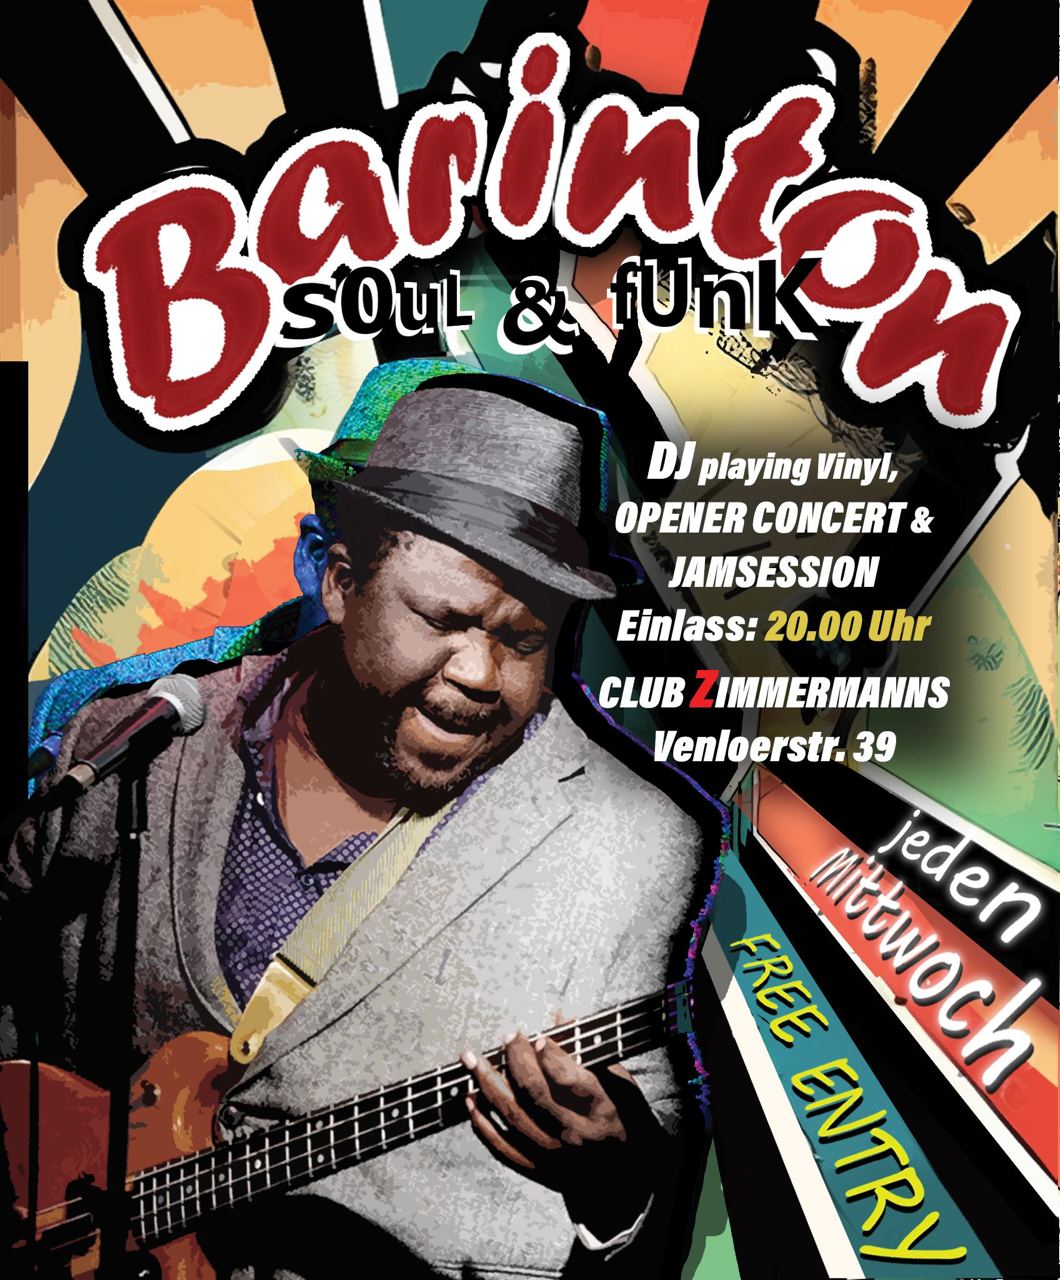 Barinton Soul & Funk, Dj playing Vinyl, Opener Concert & Jamsession, Club Zimmermanns, Venloer Straße 39, Belgisches Viertel